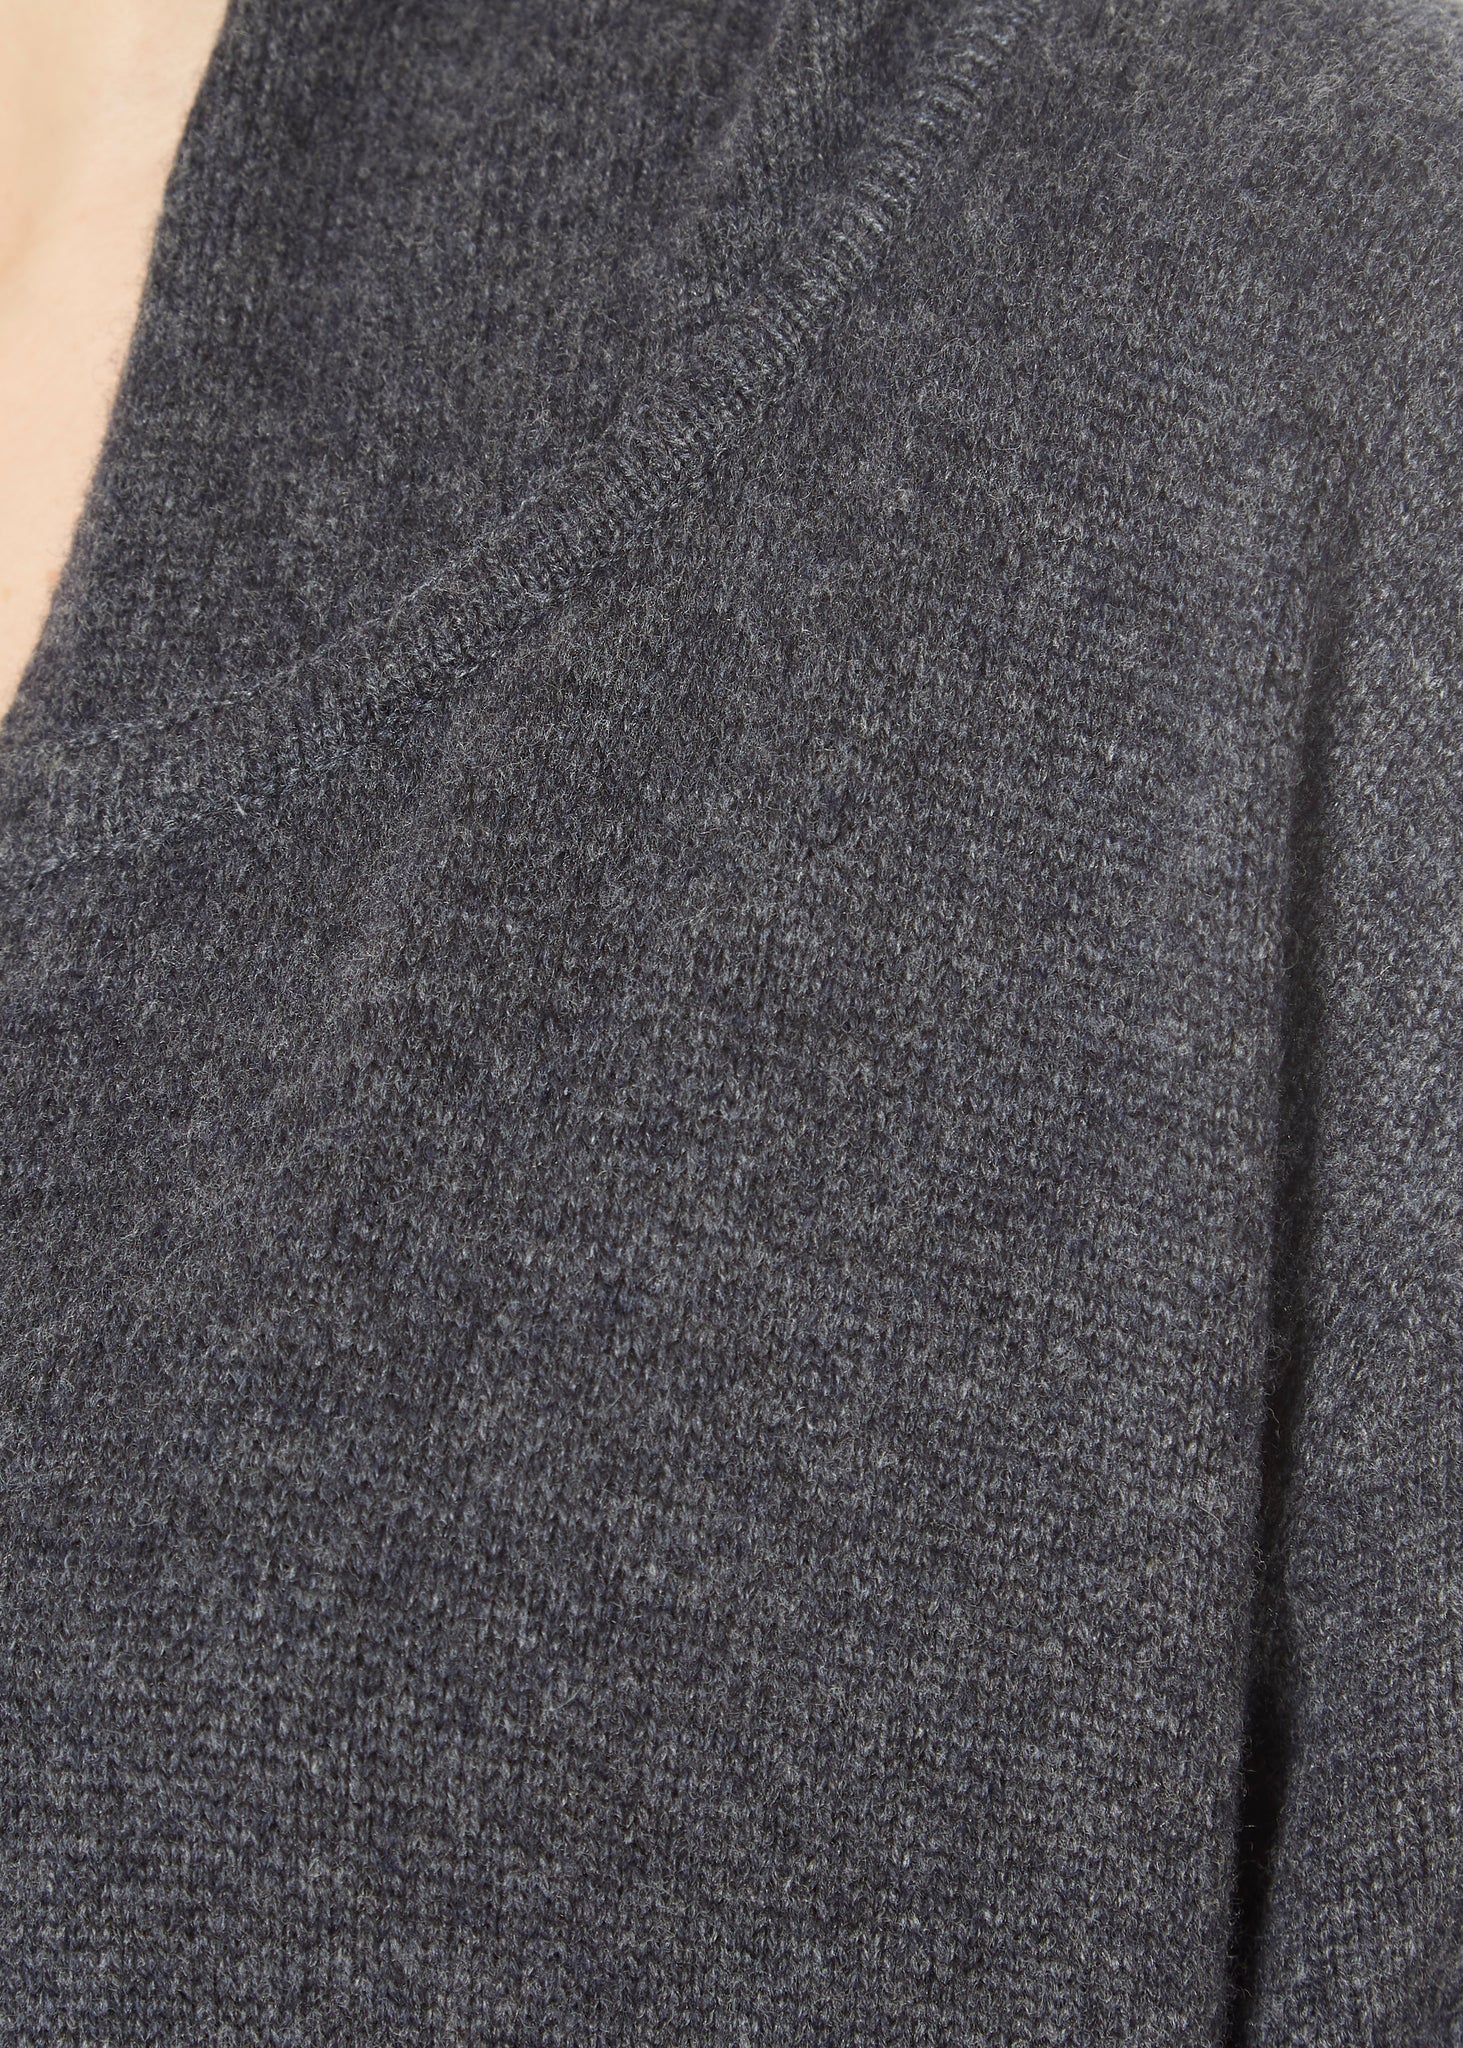 Jessimara Knitwear Haven Graphite Marl Long Cardigan